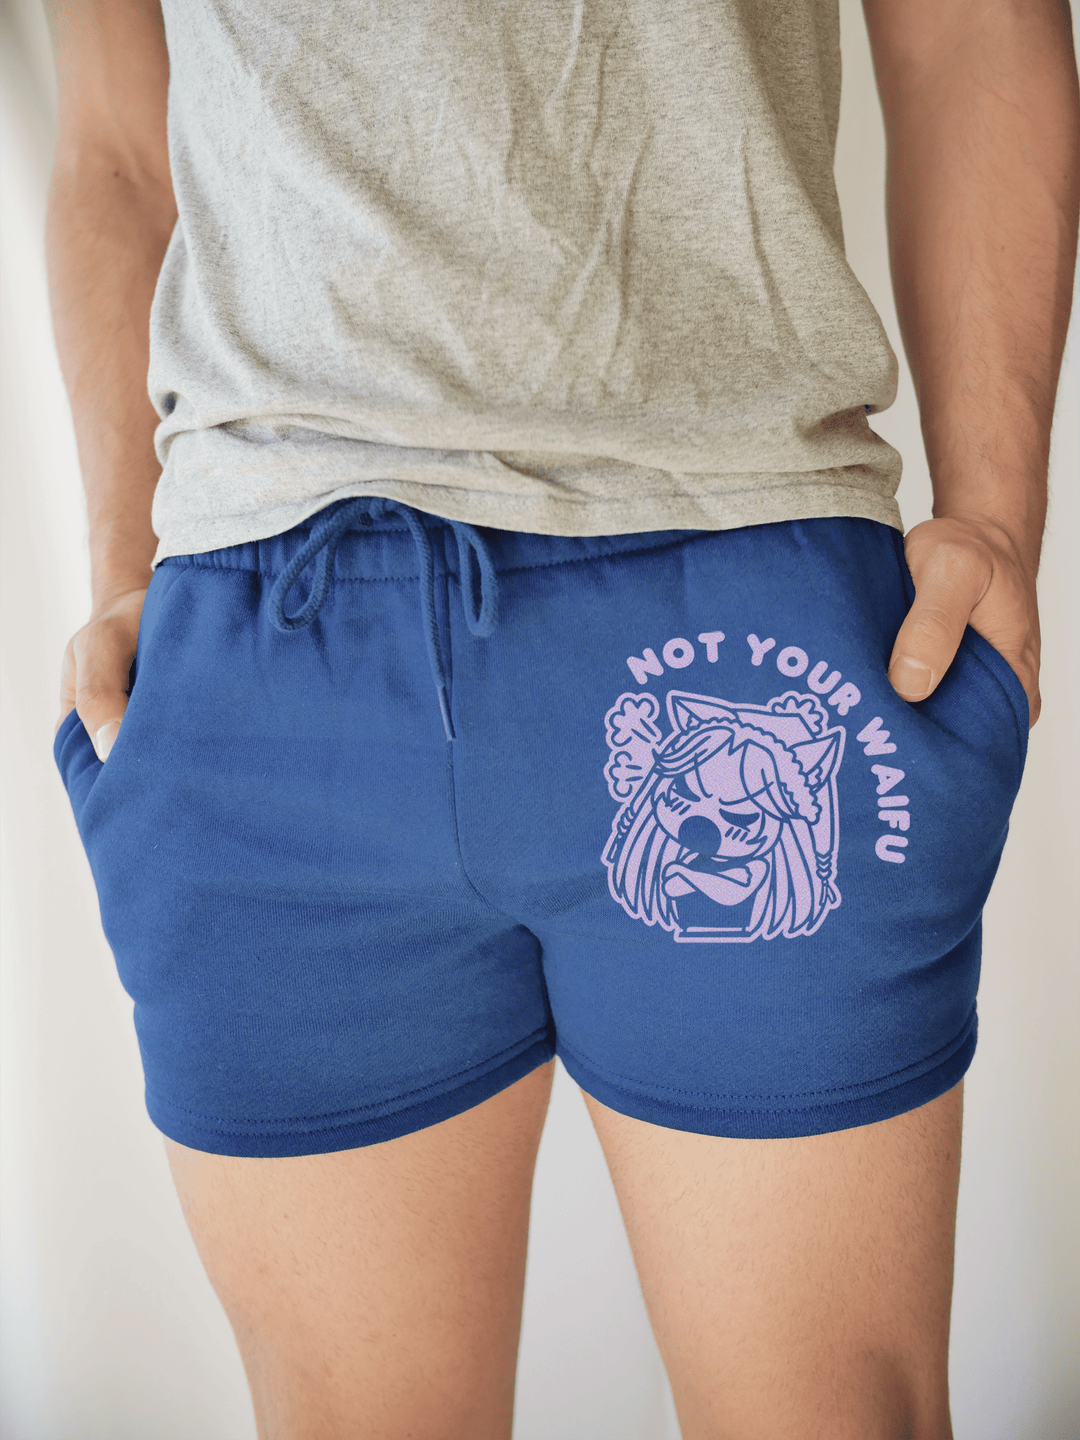 PixelThat Punderwear Shorts Royal Blue / S / Front Not Your Waifu Men's Gym Shorts